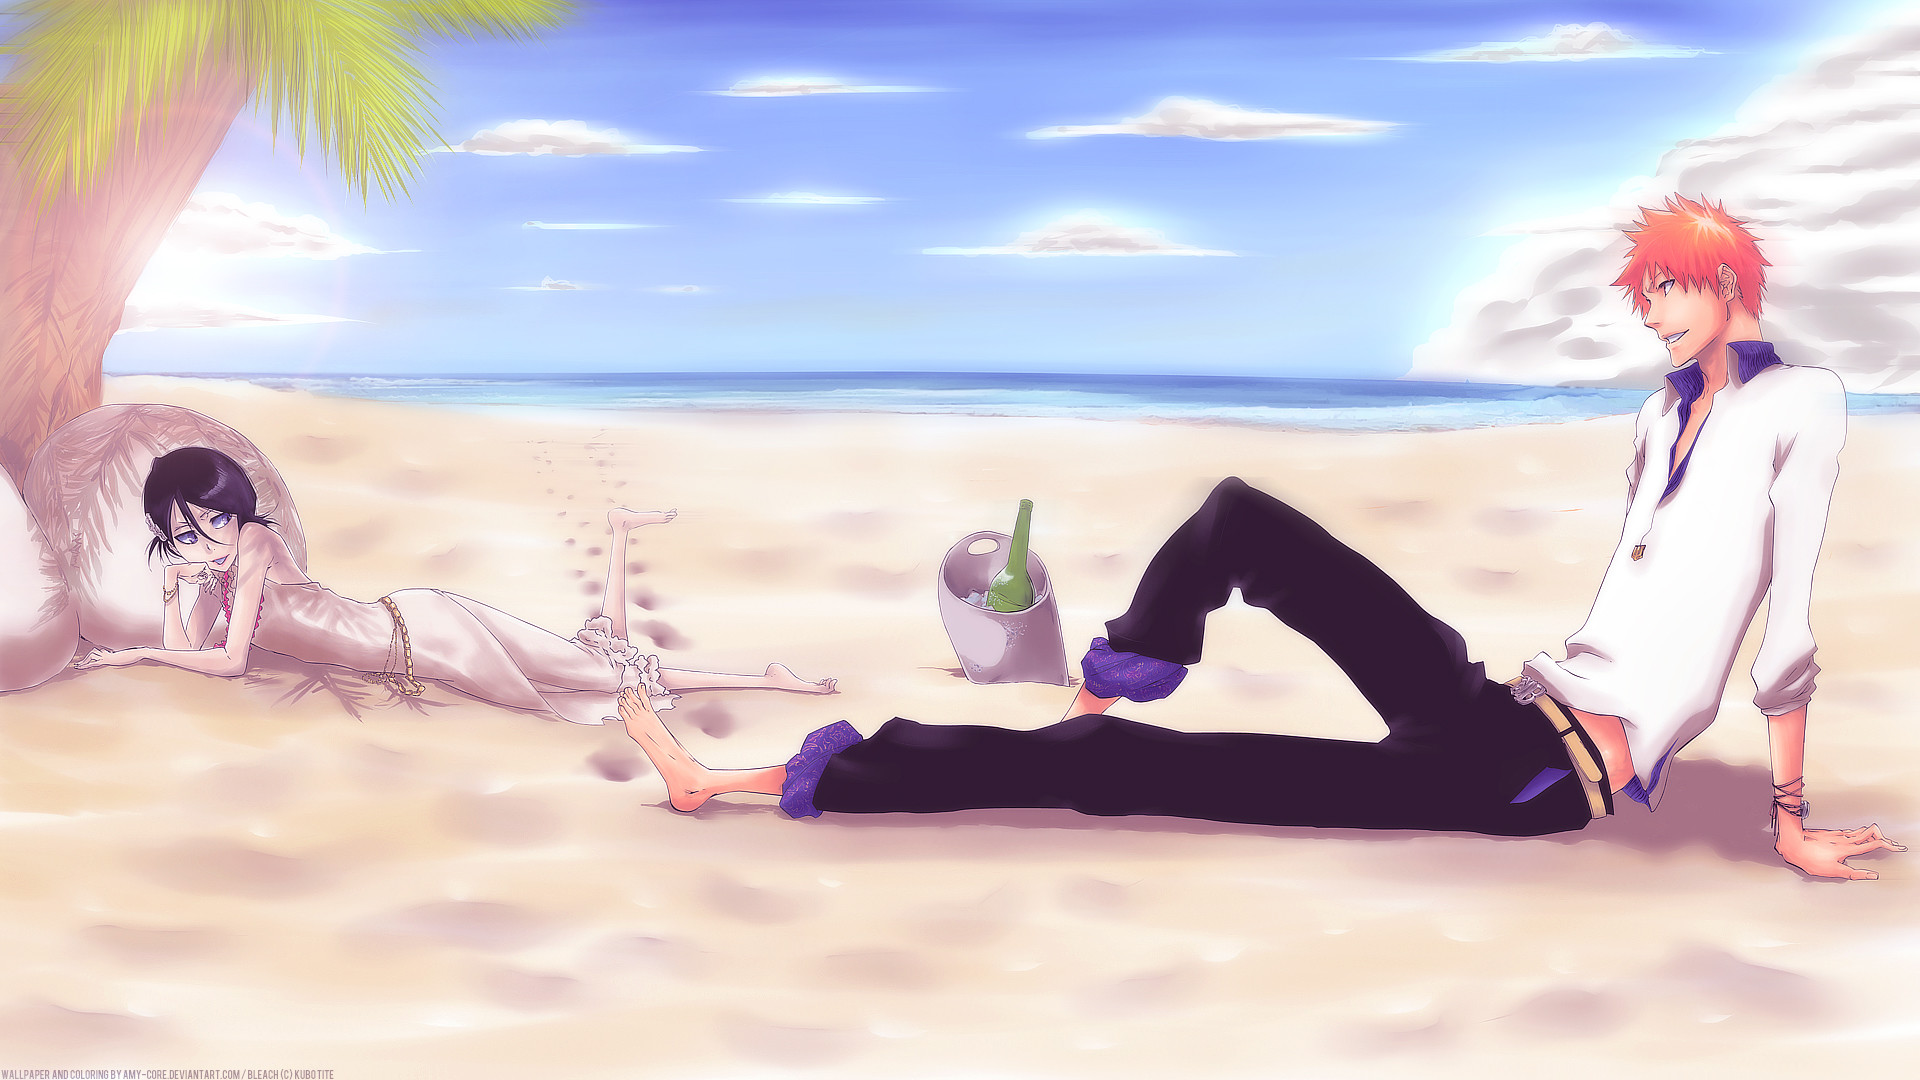 Rukia with ichigo at beach